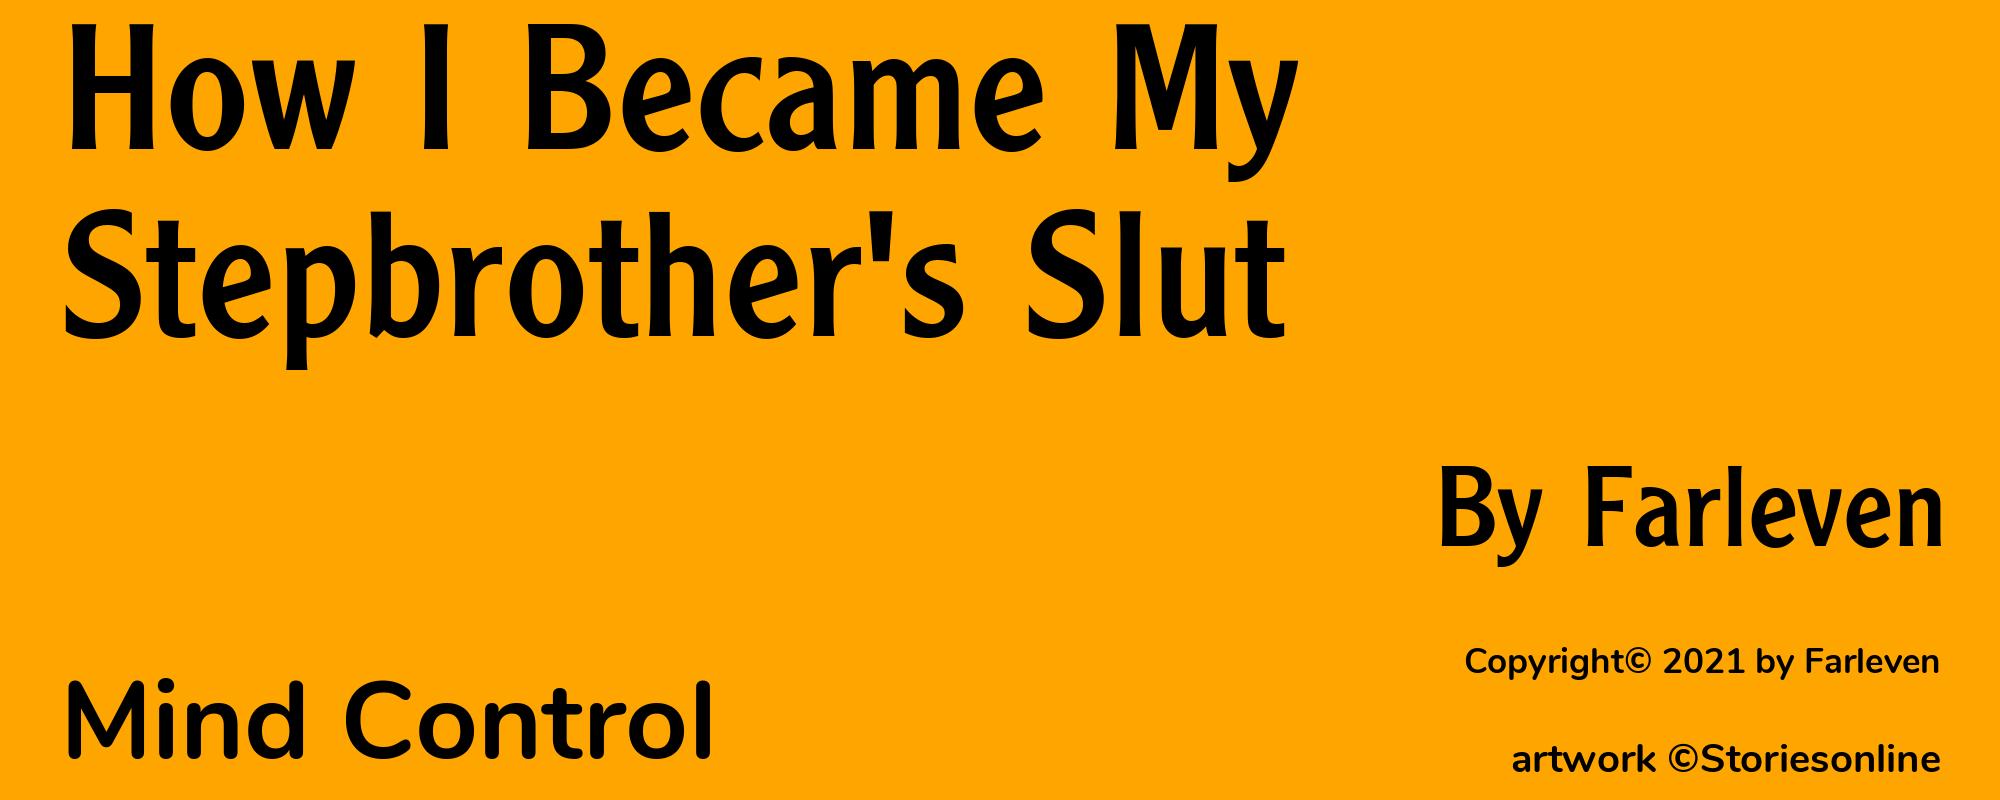 How I Became My Stepbrother's Slut - Cover